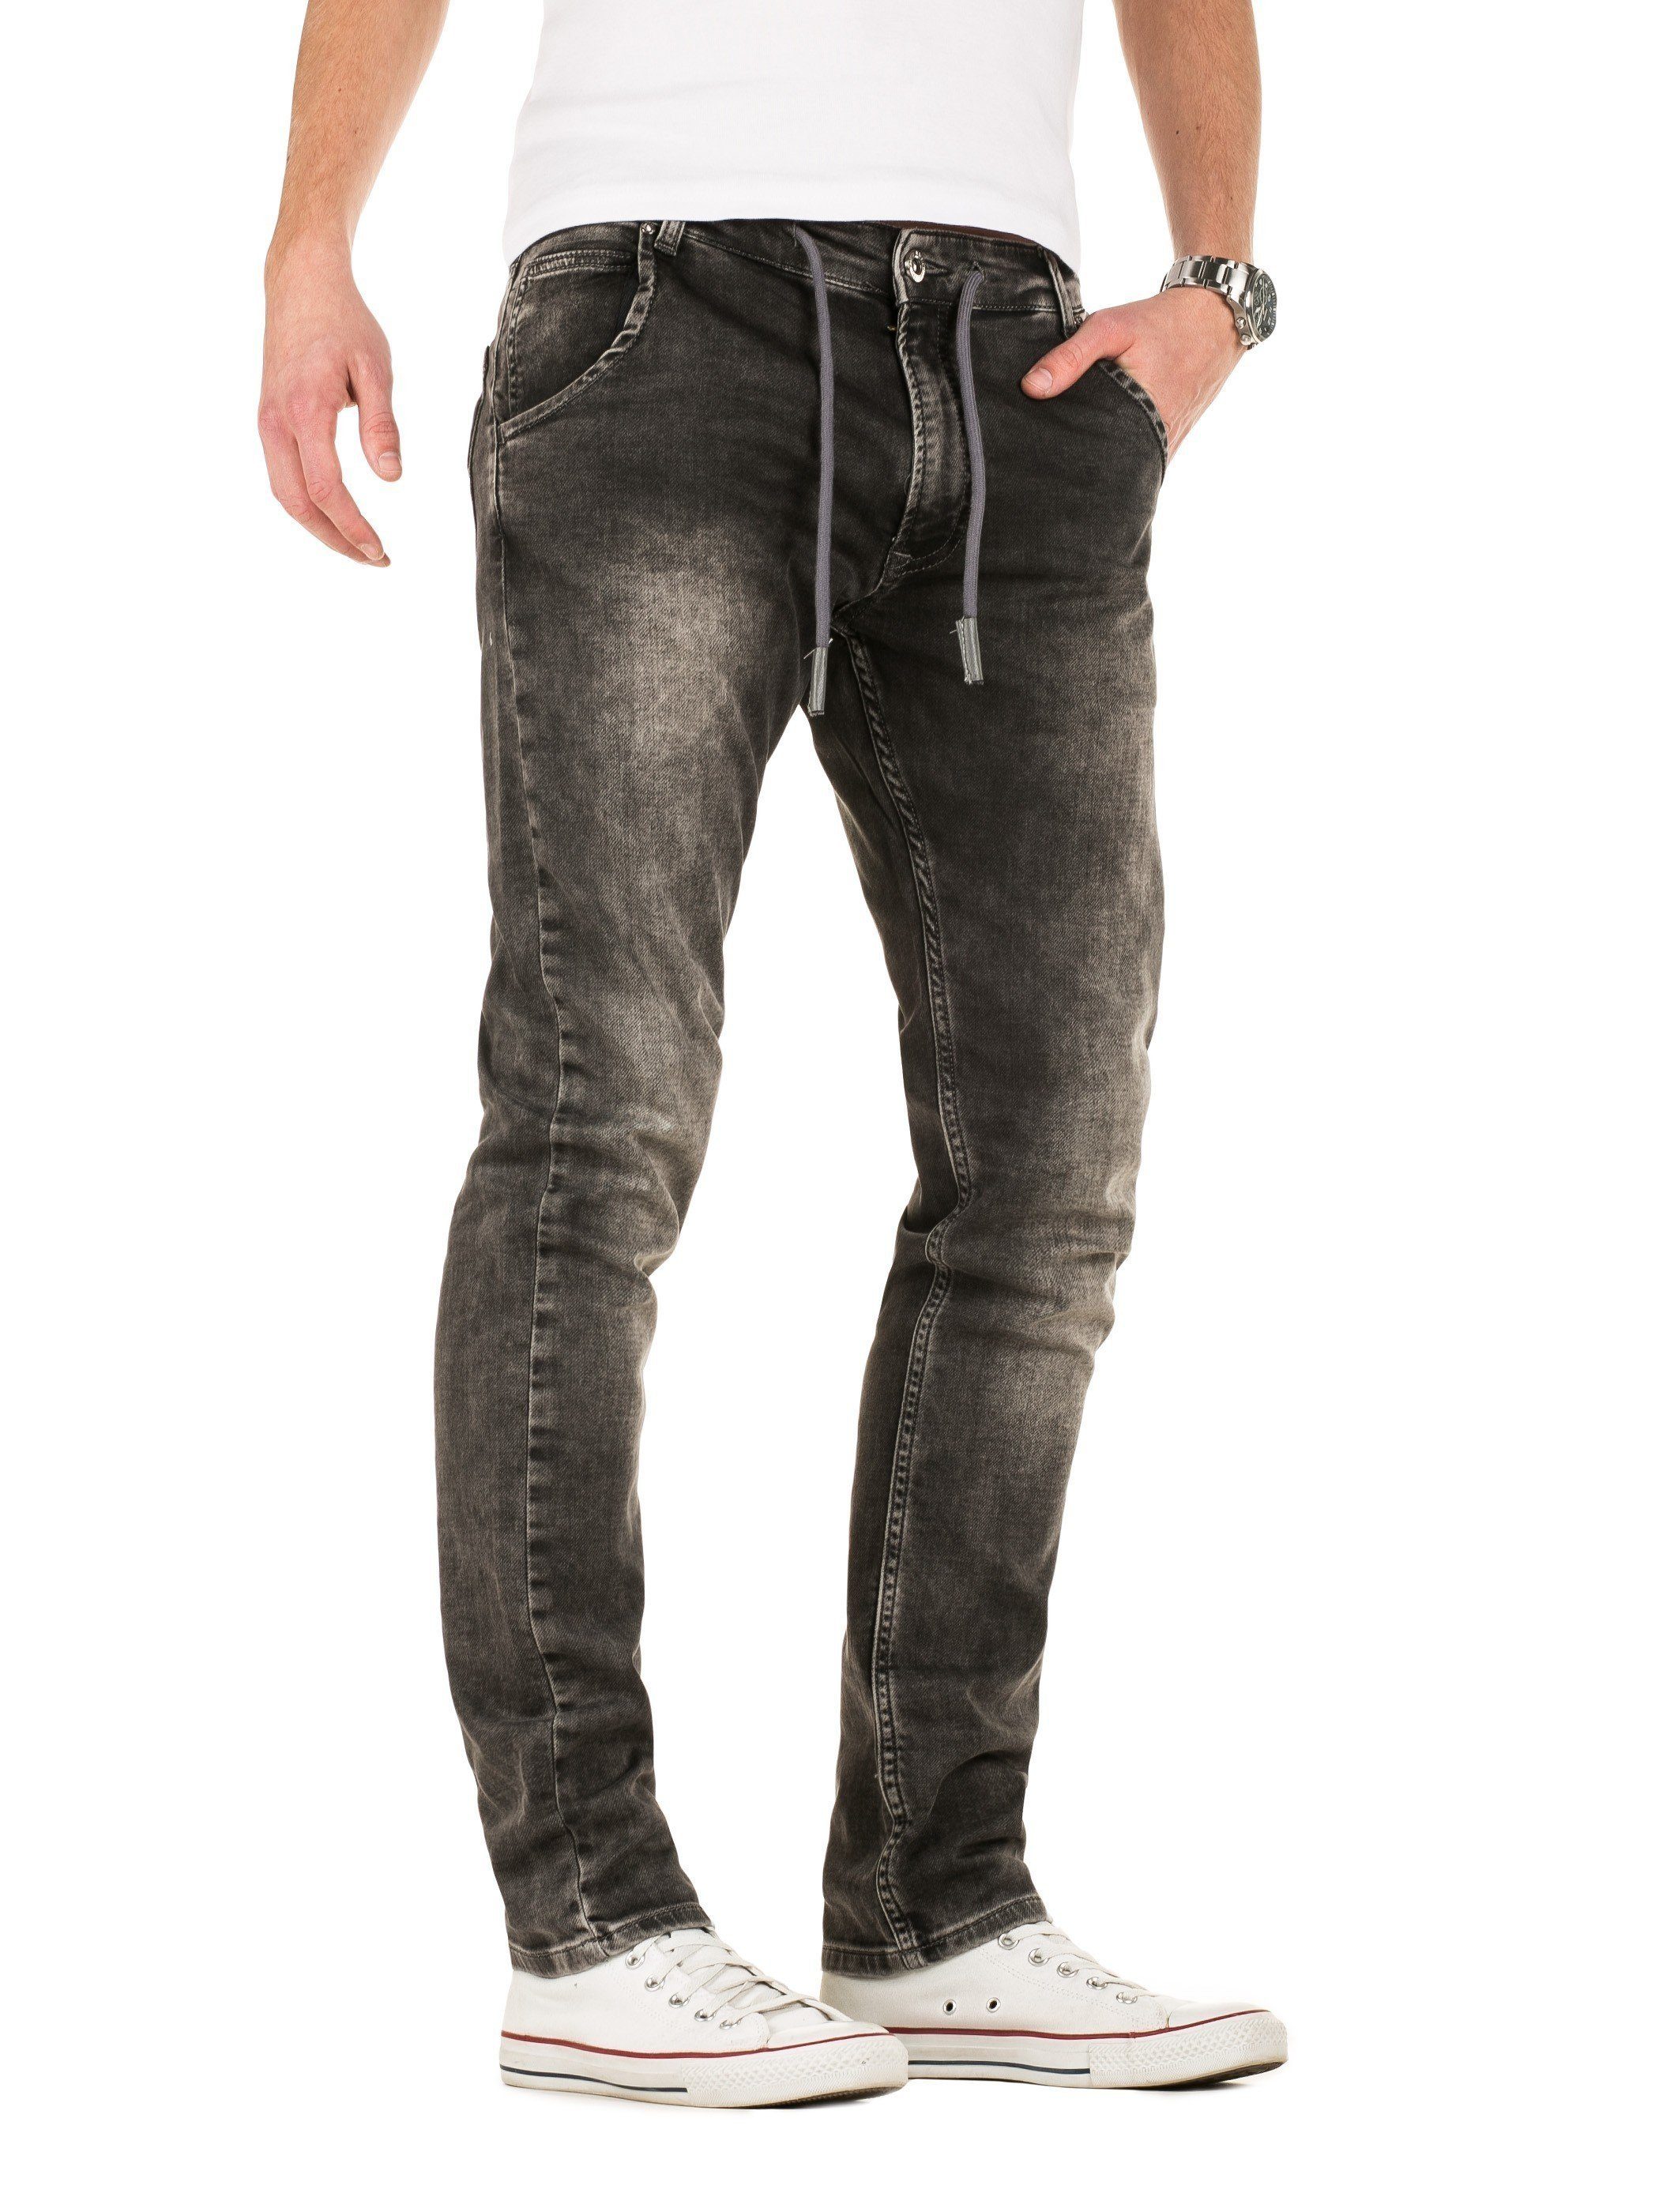 WOTEGA Slim-fit-Jeans Herren Jogginghose in Hose grey Grau Jeans in 19000) Joshua Sweathosen Denim (raven Stretch Jogging Jeans-Look